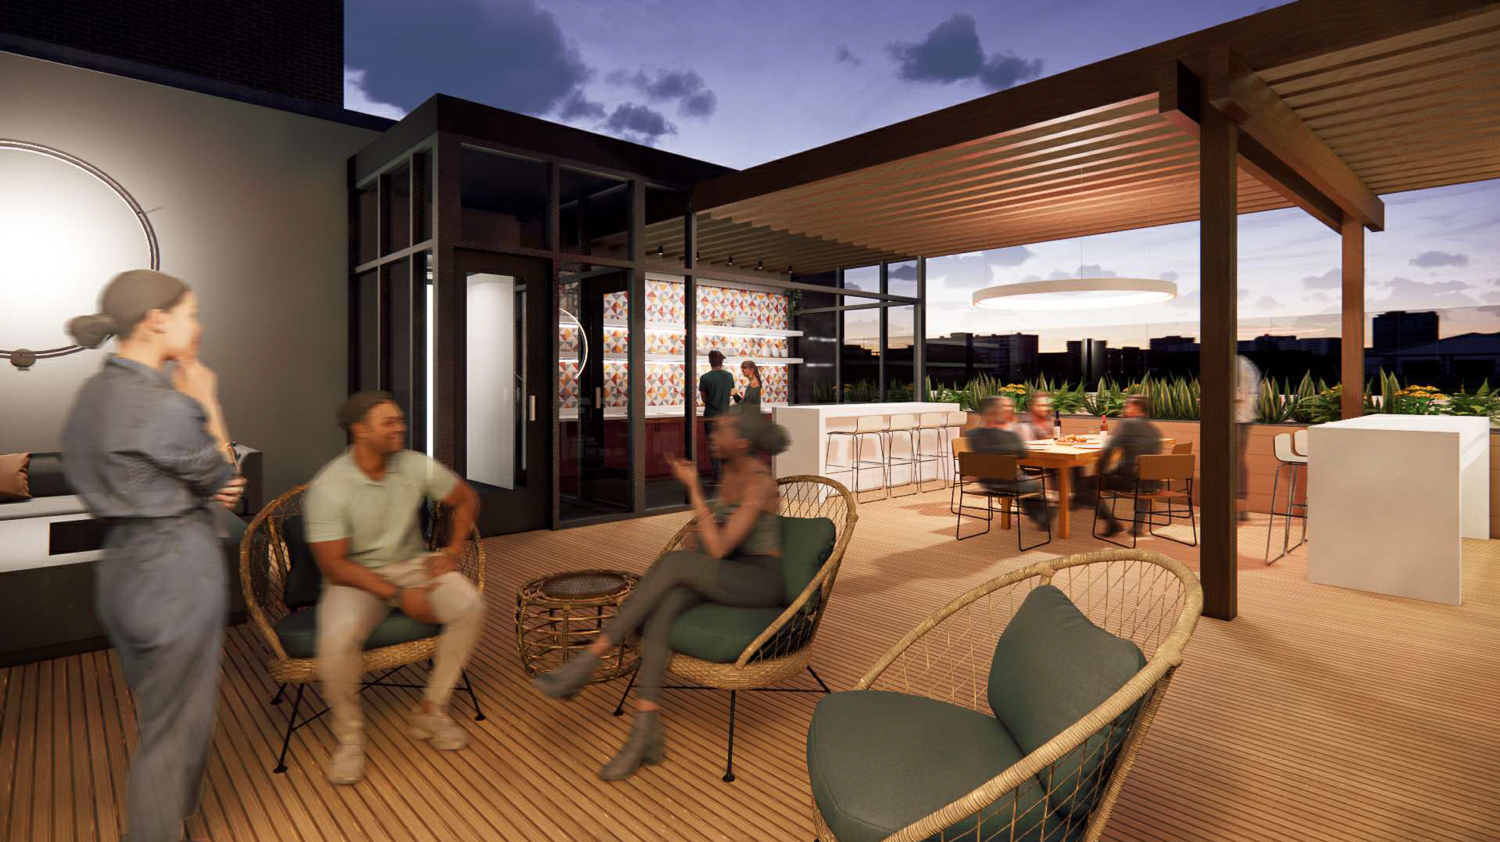 401 South Van Ness Avenue rooftop deck, rendering by Prime Design